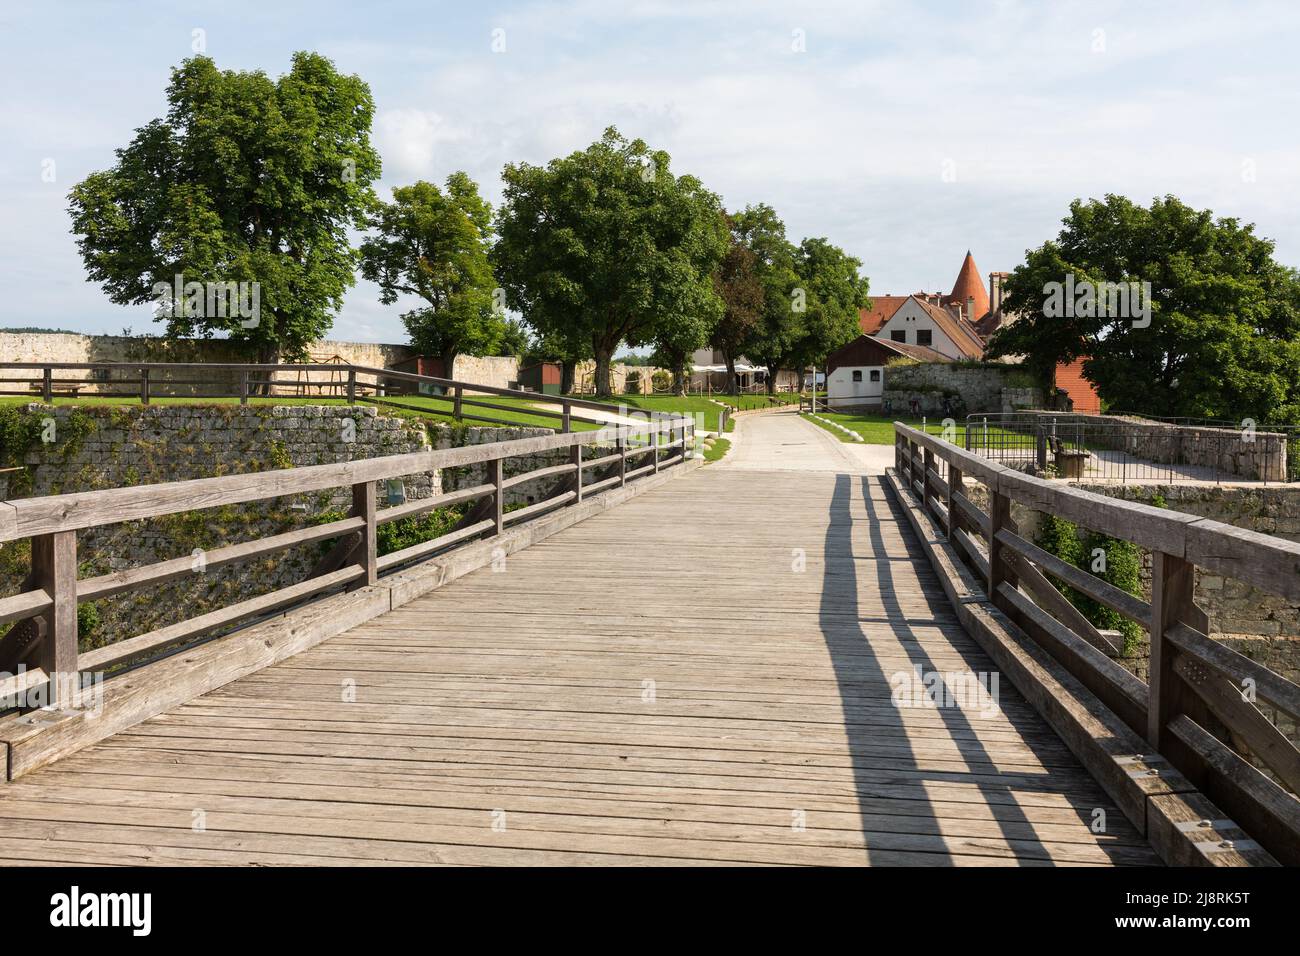 Burghausen, Germany - Jul 25, 2021: View across a wooden bridge inside the walls of Burghausen castle. Stock Photo